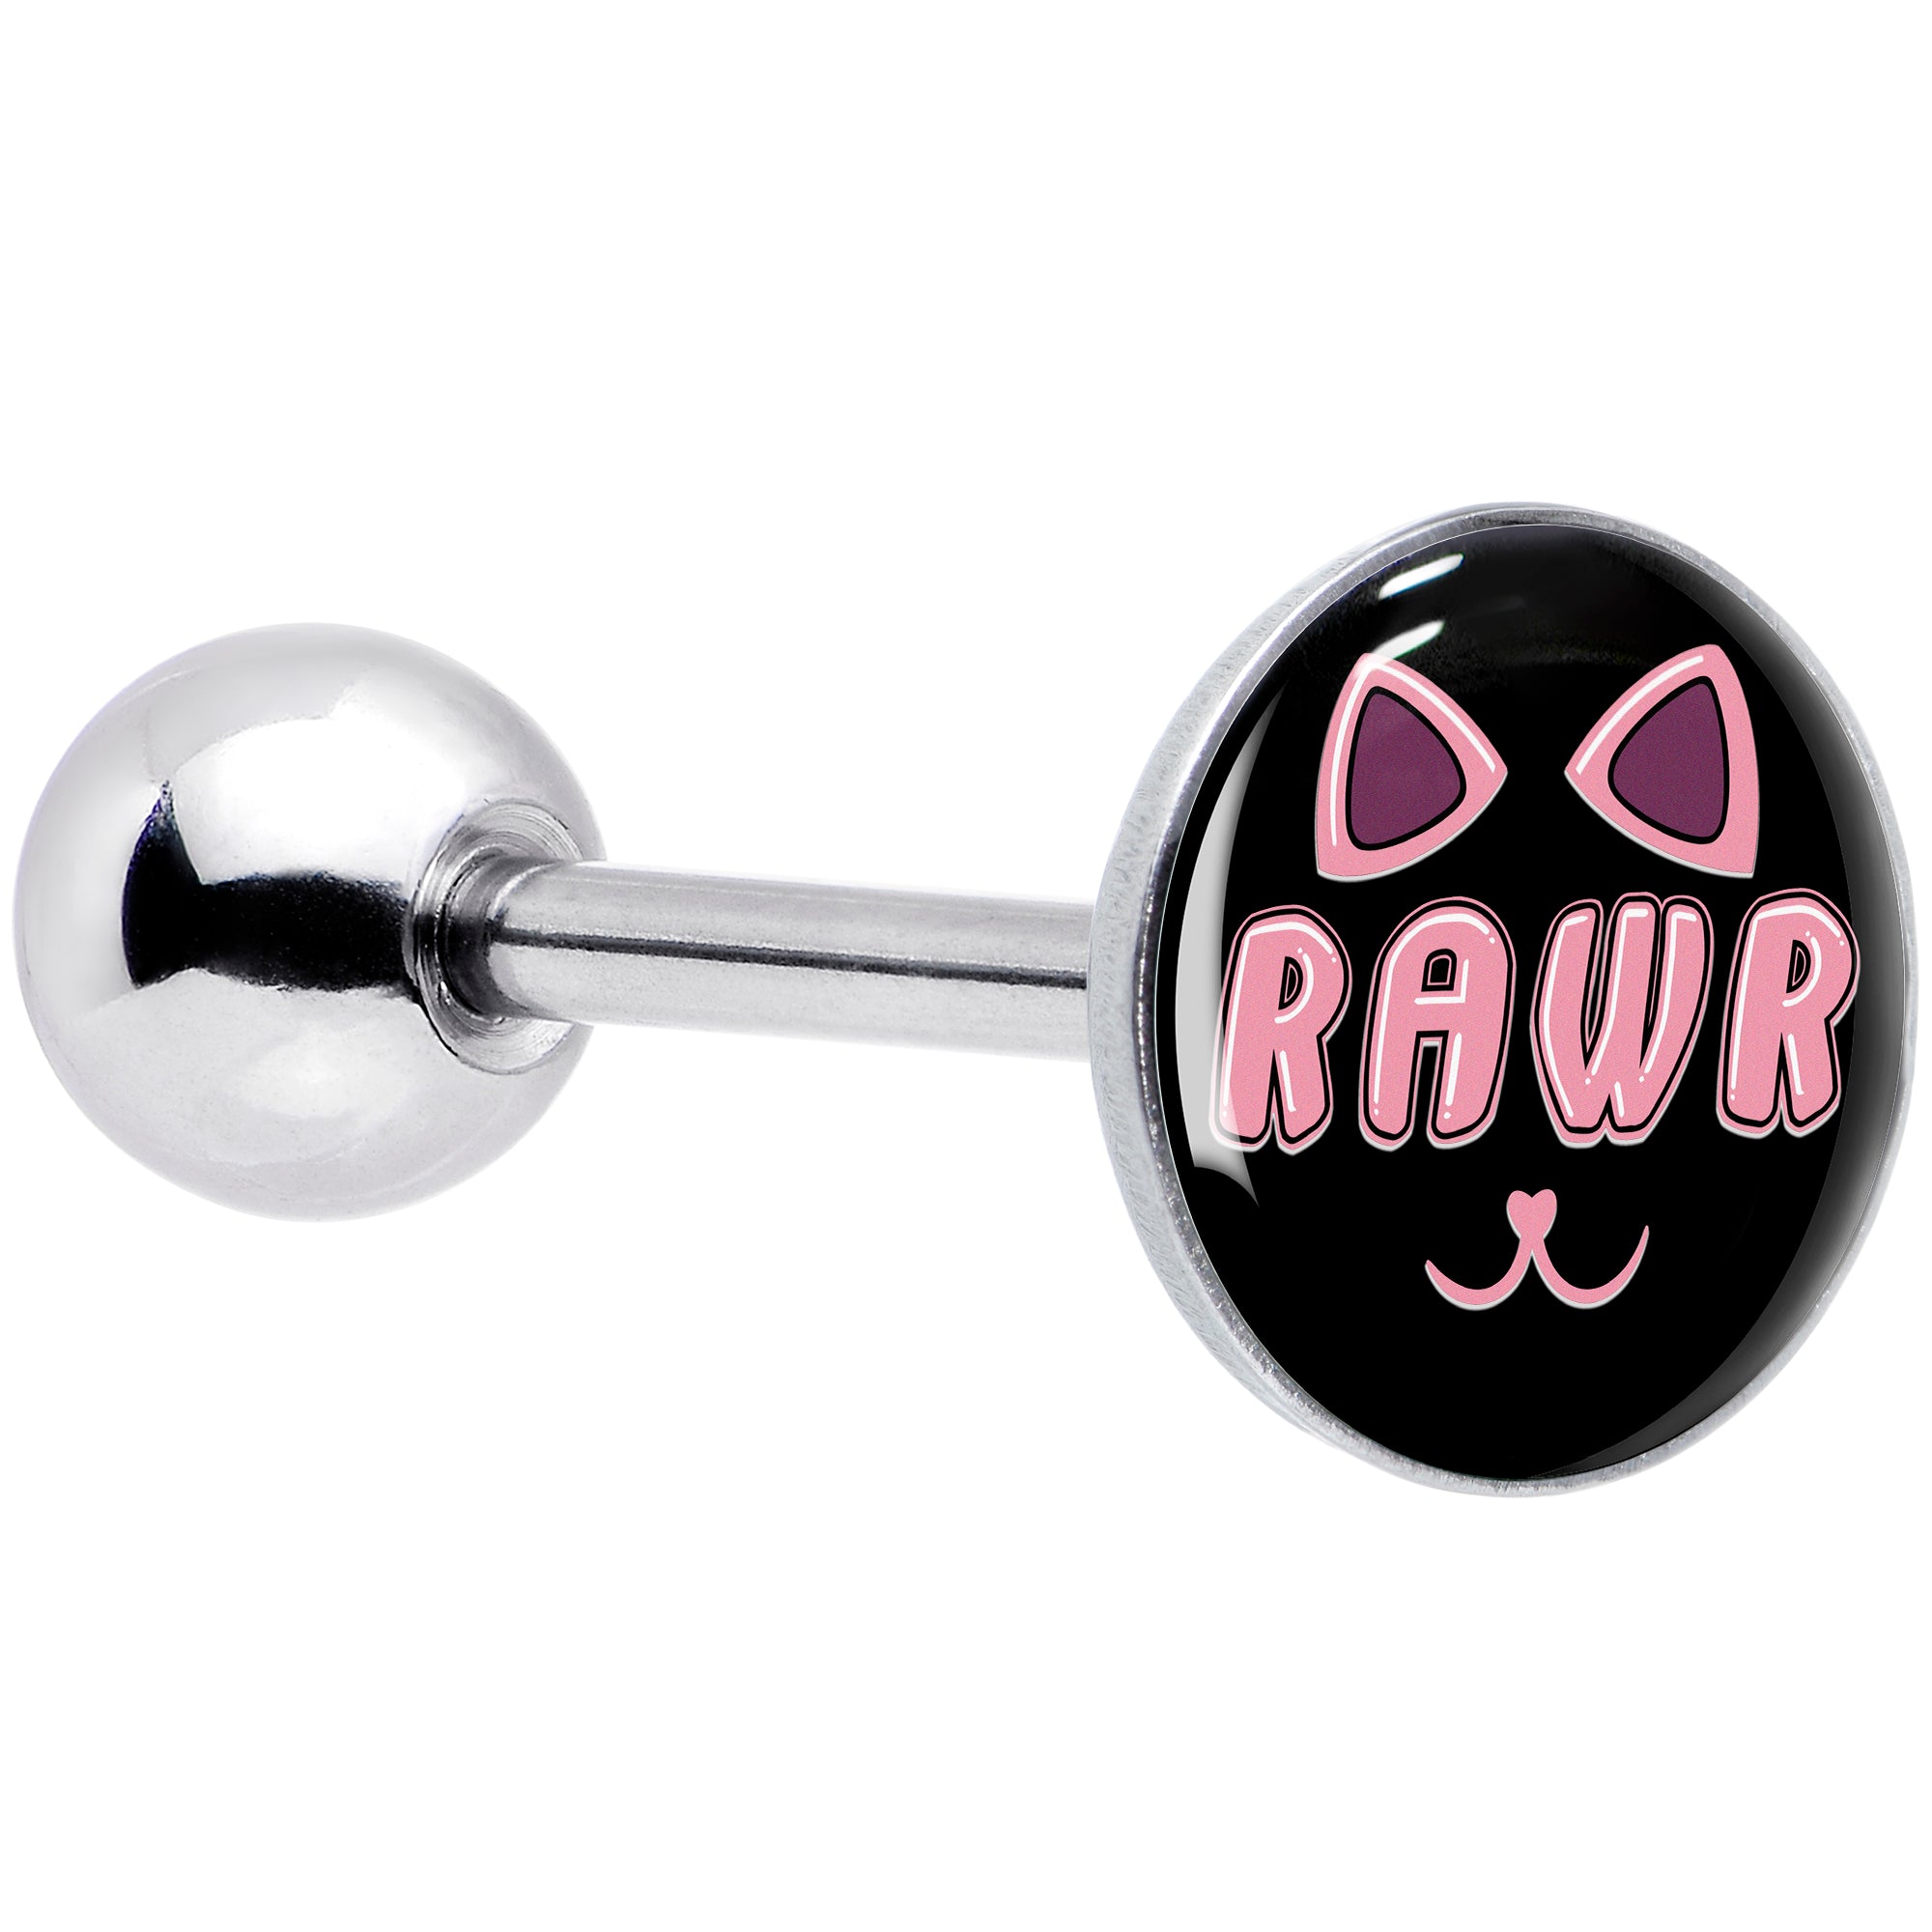 RAWR Kittly Cat Barbell Tongue Ring